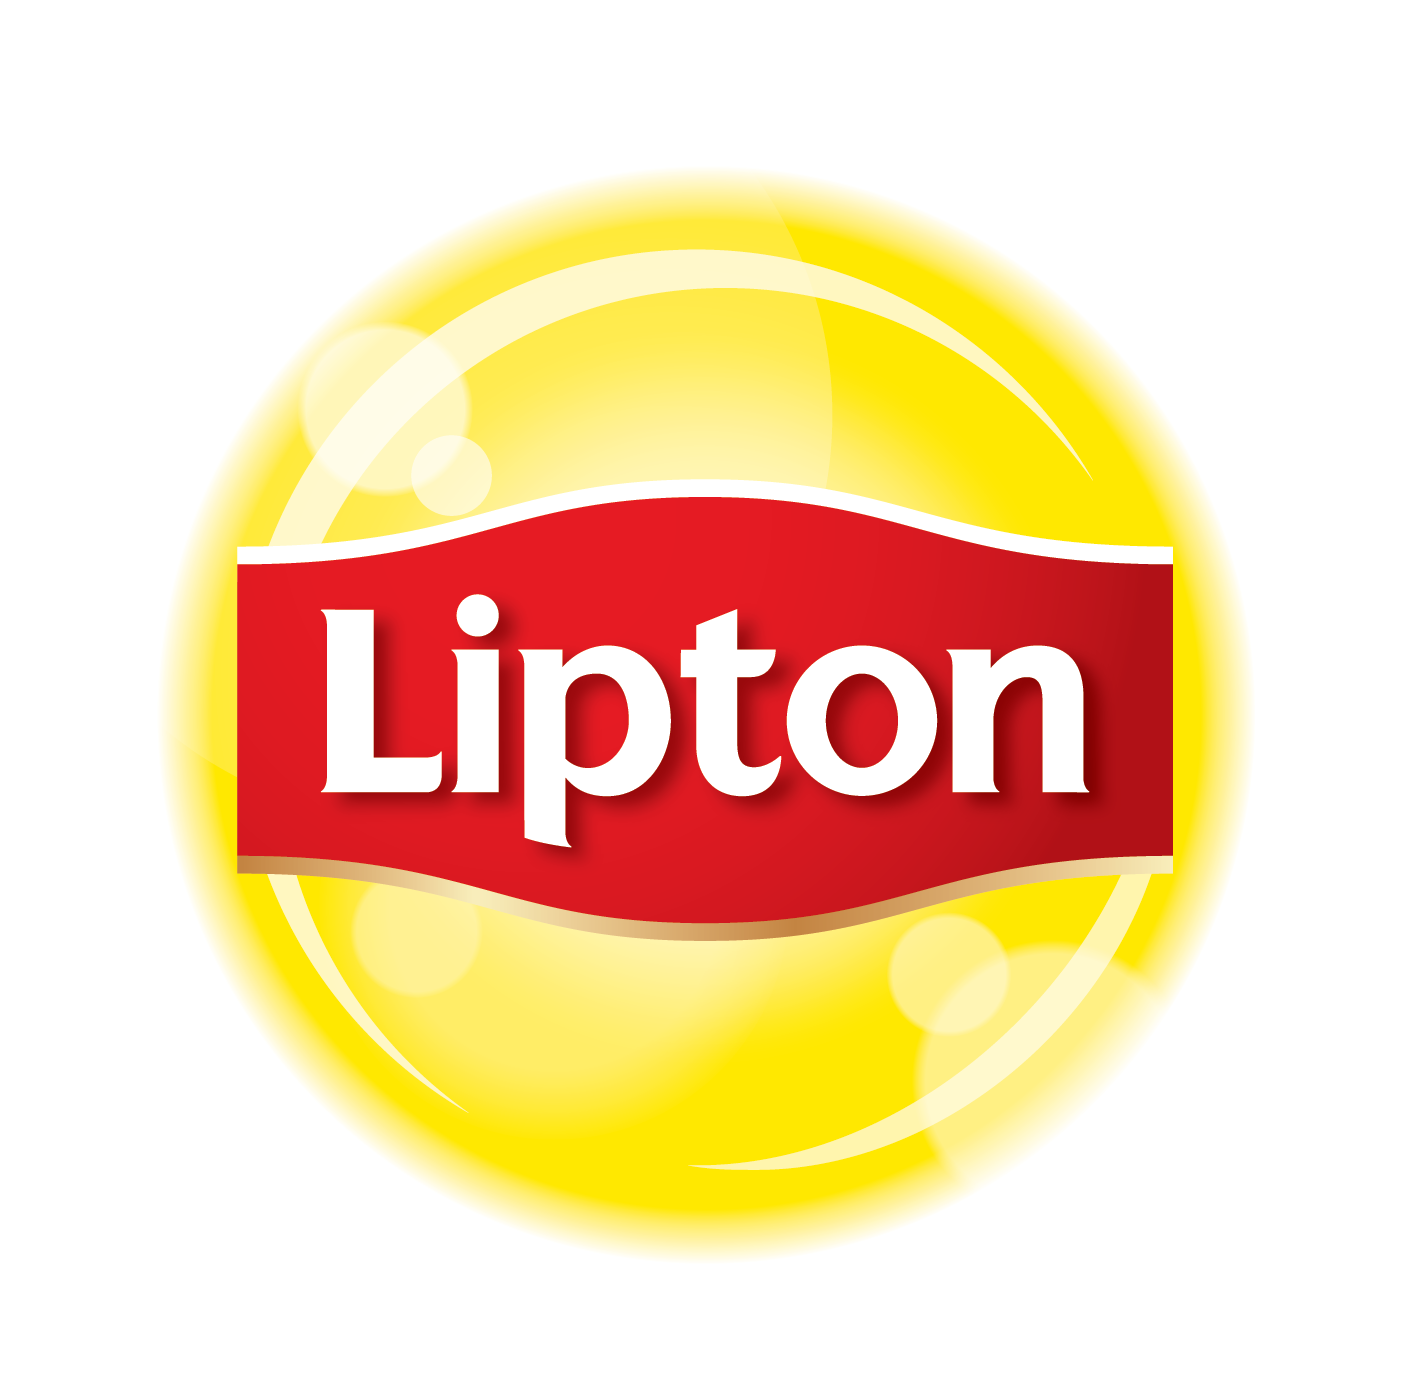 LIPTON LIVE ALIVE